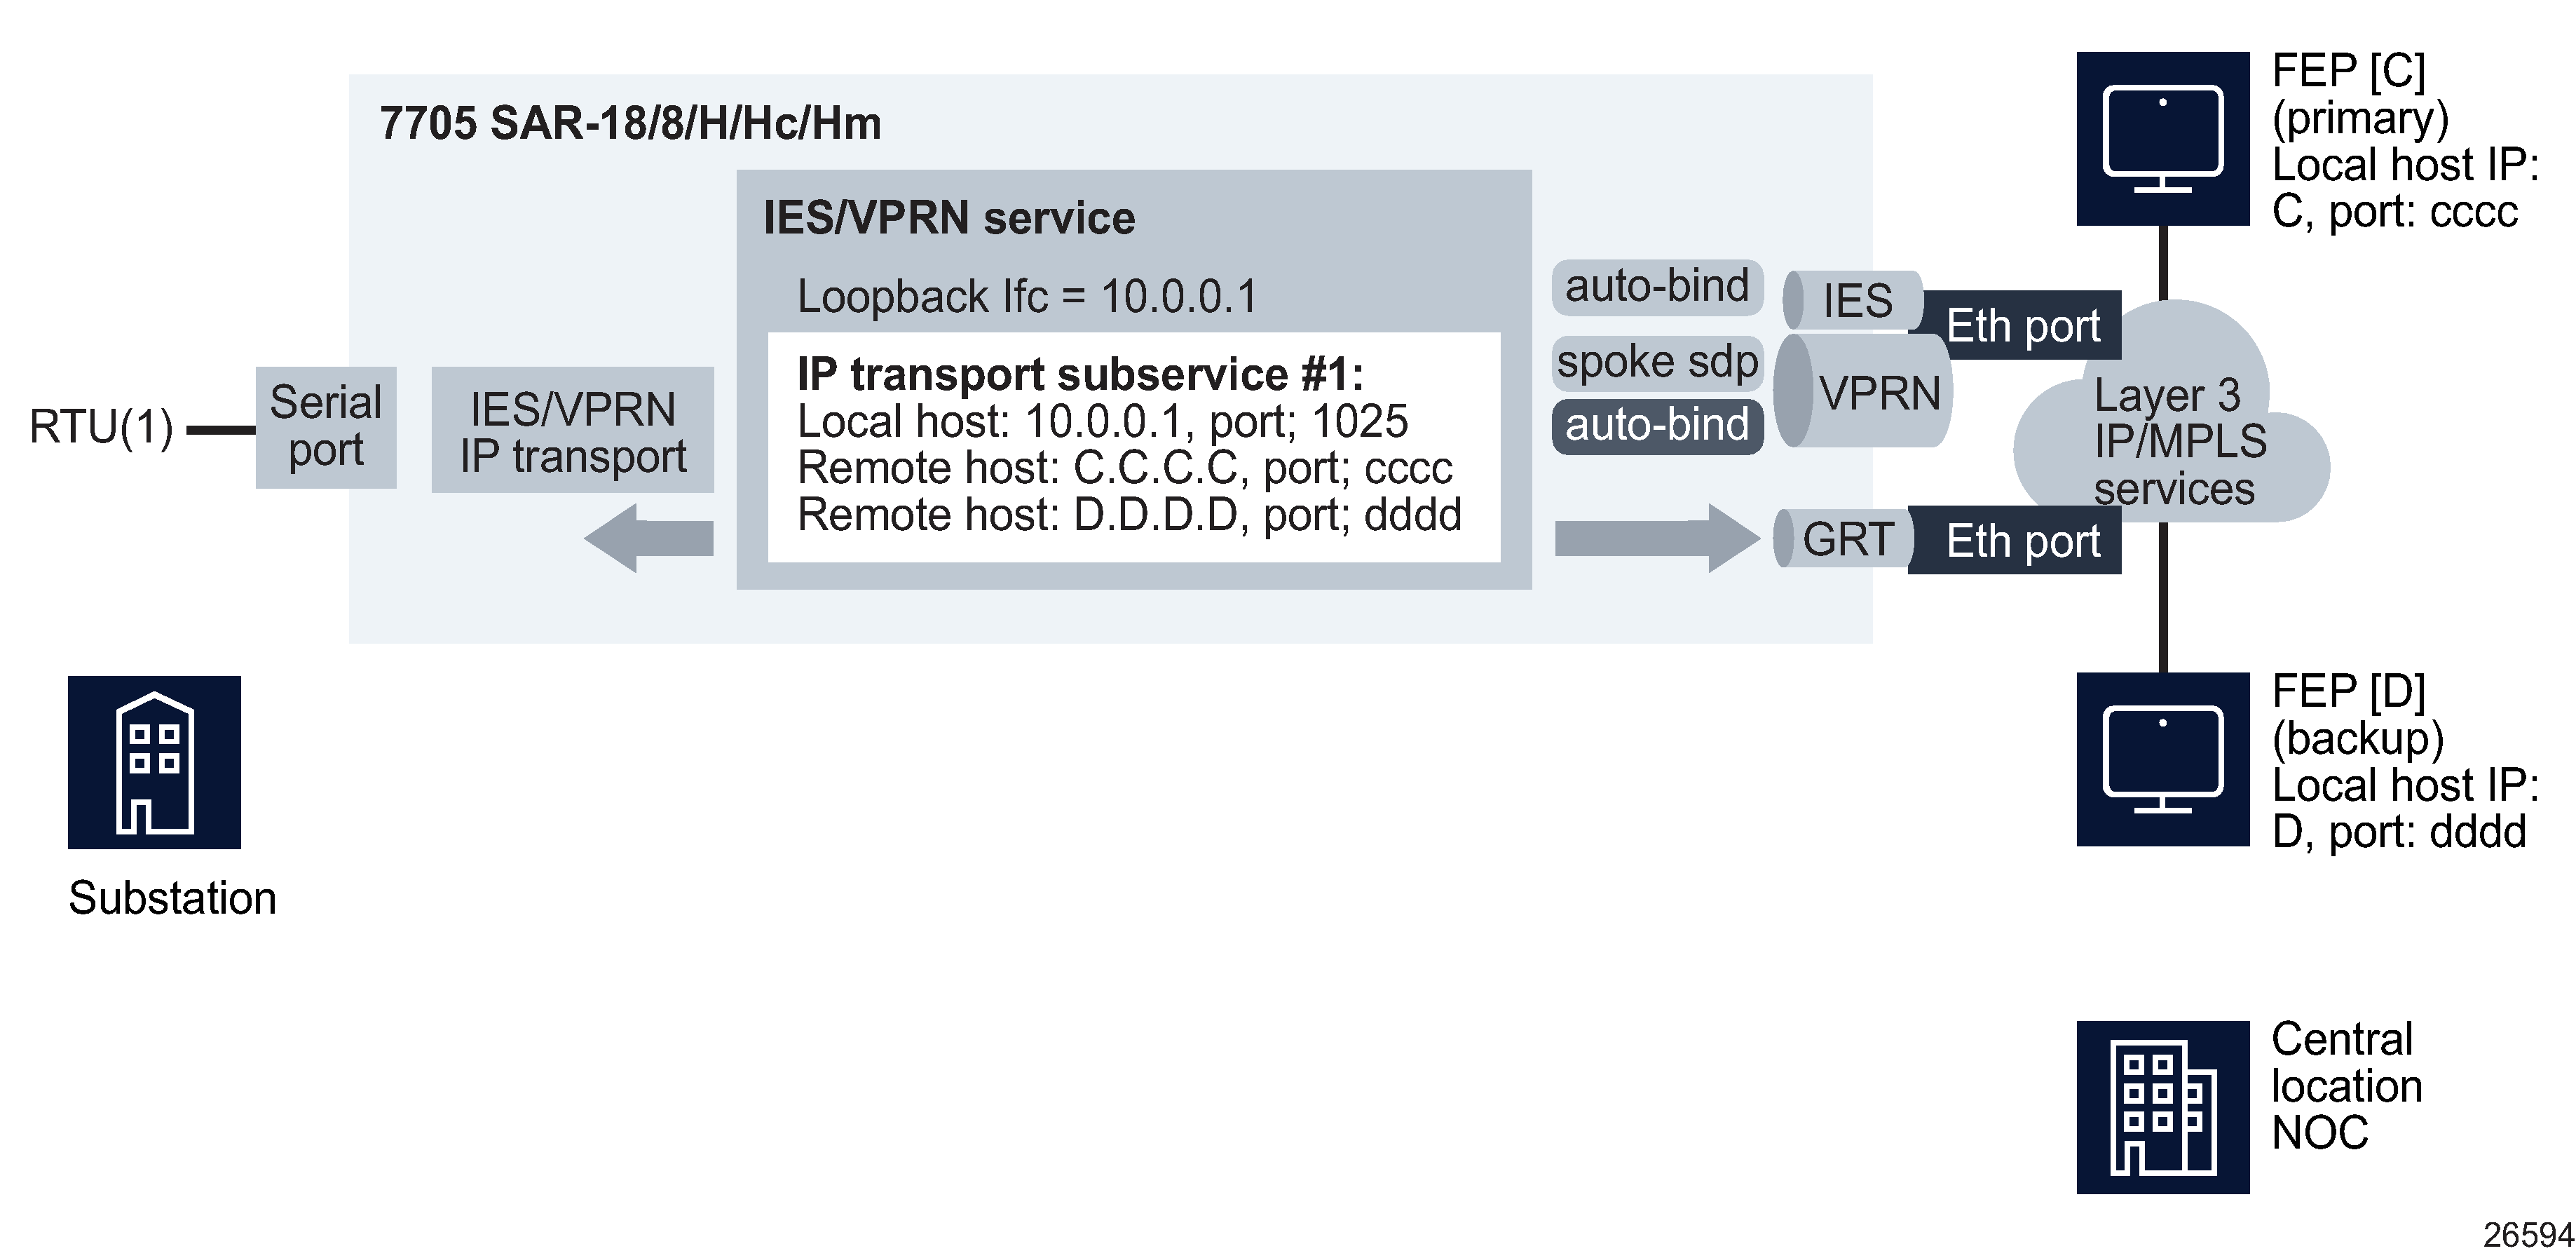 Sample IES/VPRN IP transport configuration